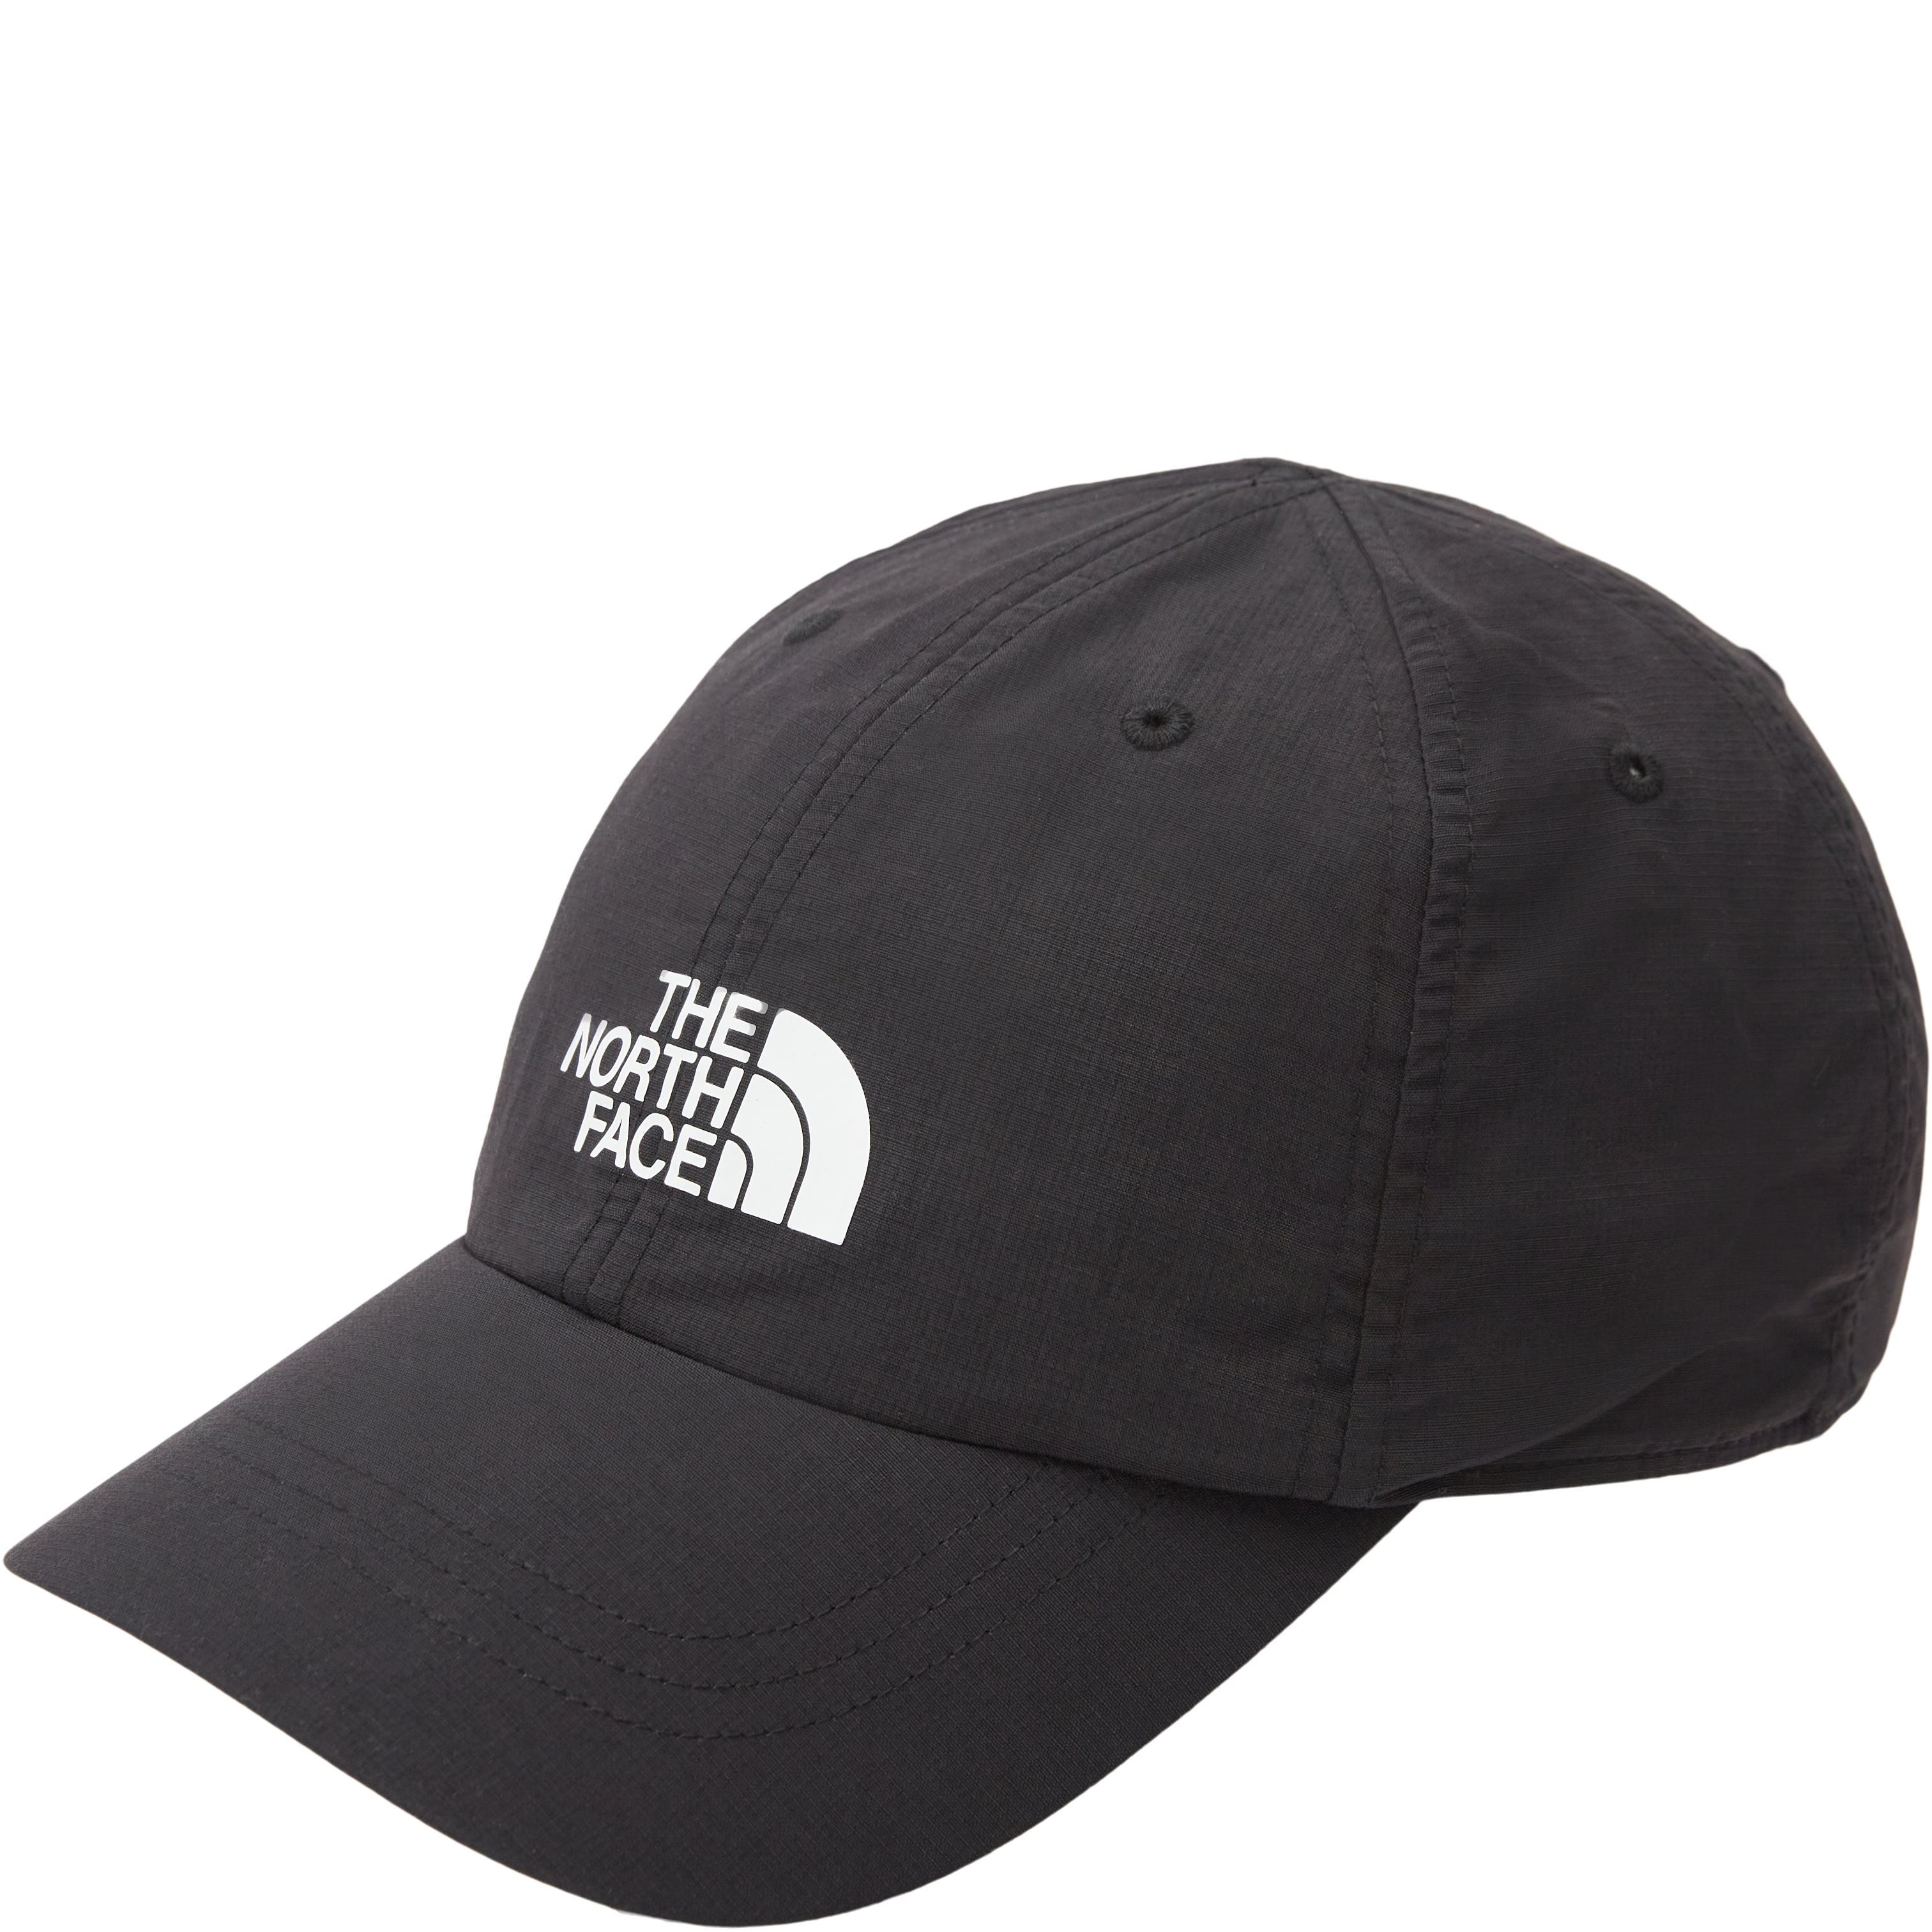 Horizon Hat - Caps - Black